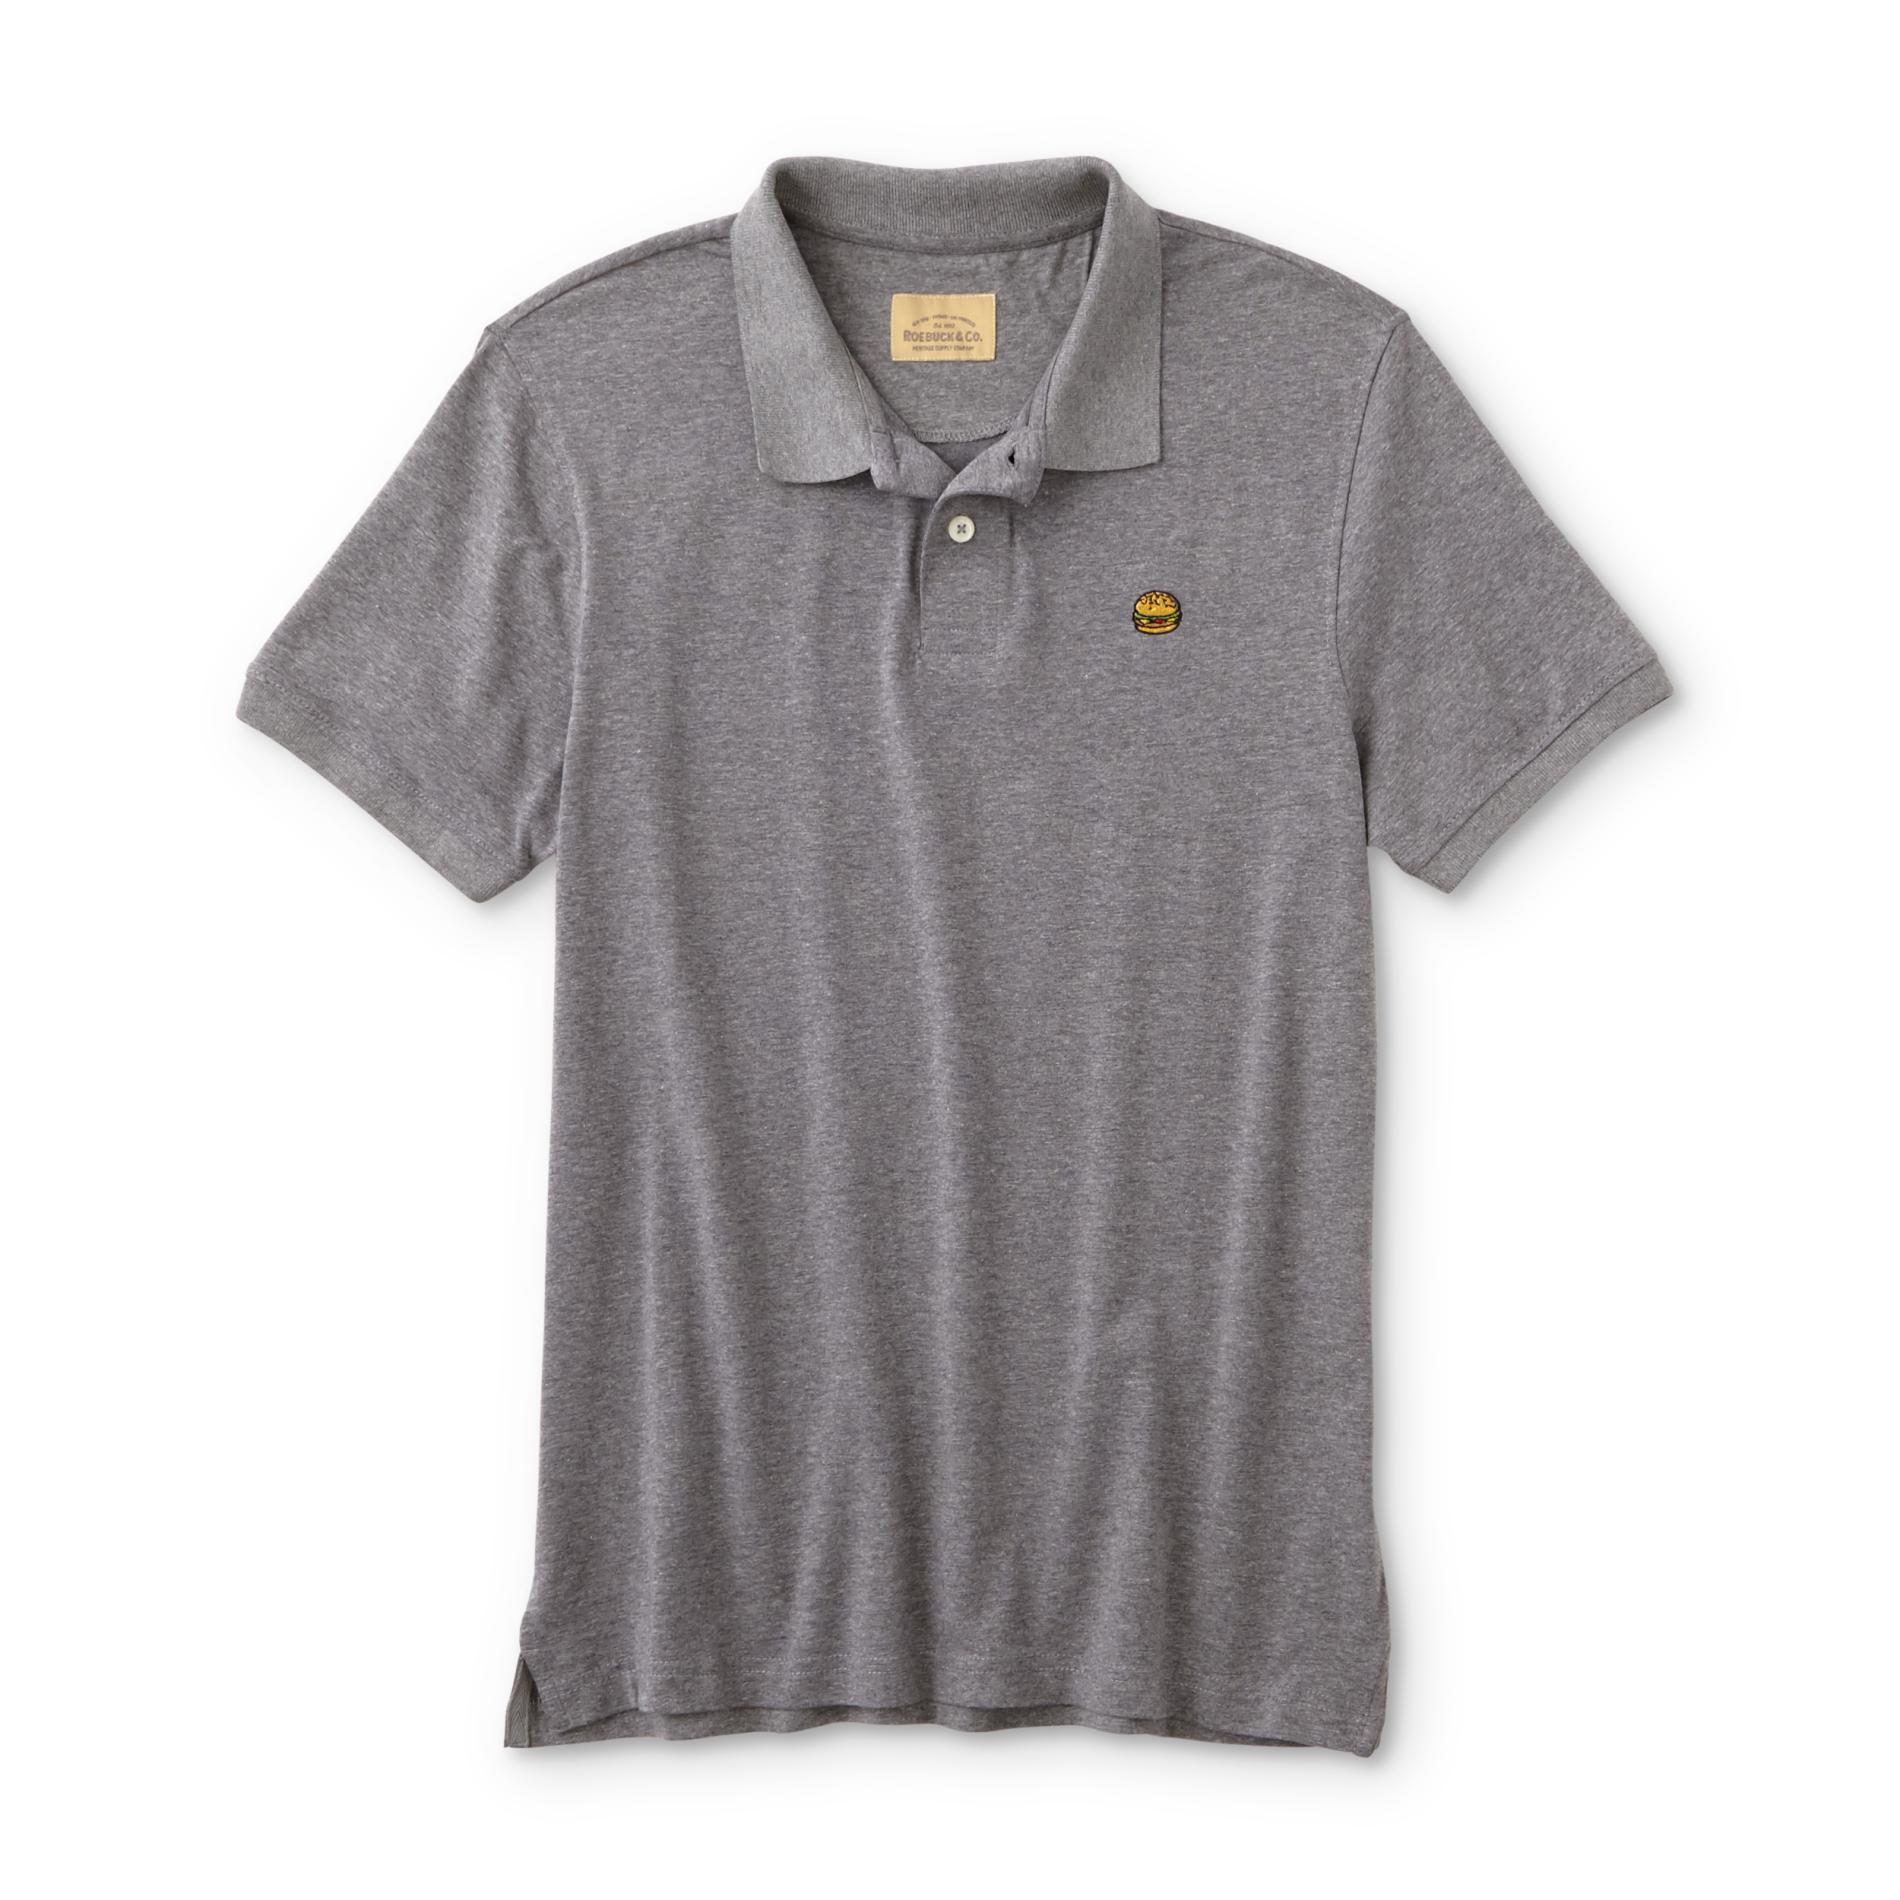 Roebuck & Co. Young Men's Embroidered Polo Shirt - Burger